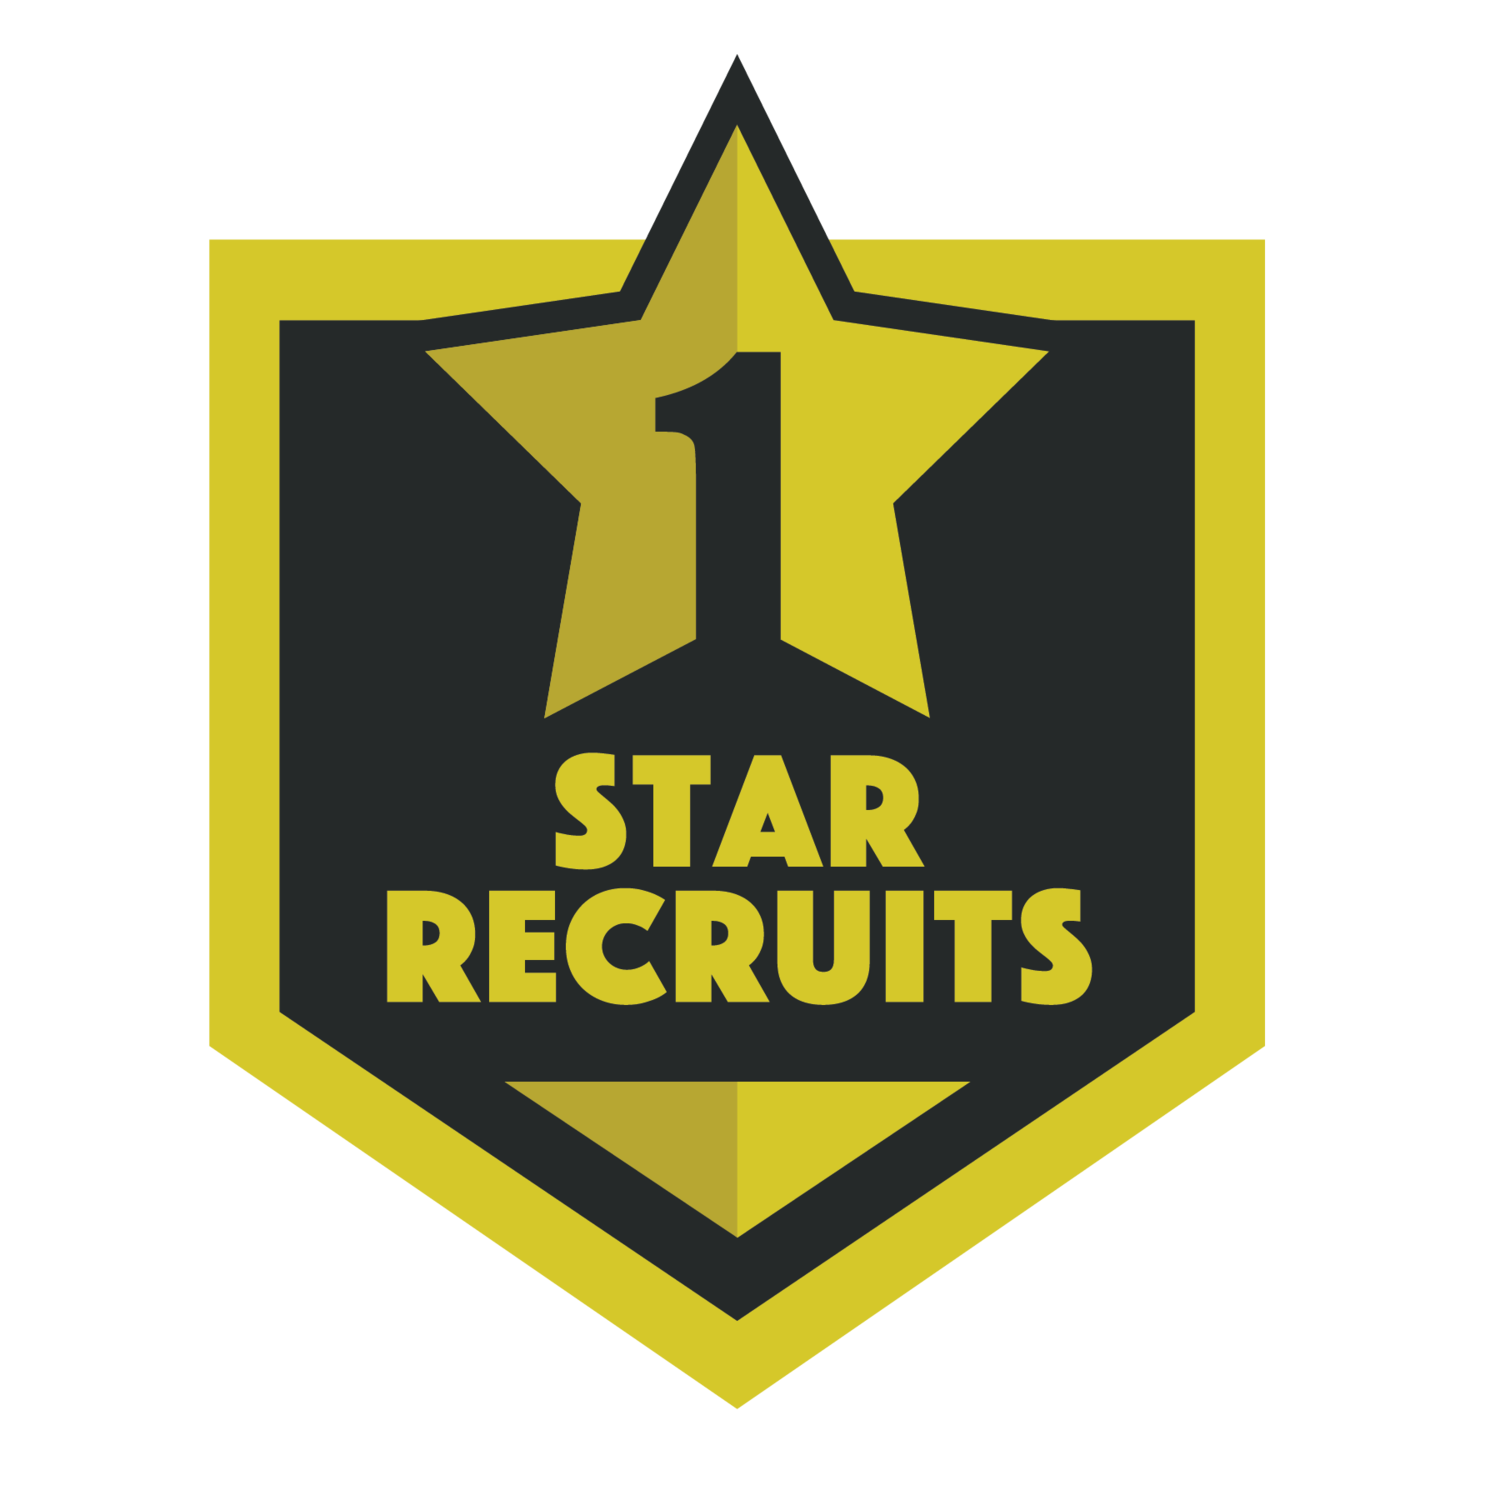 1 Star Recruits